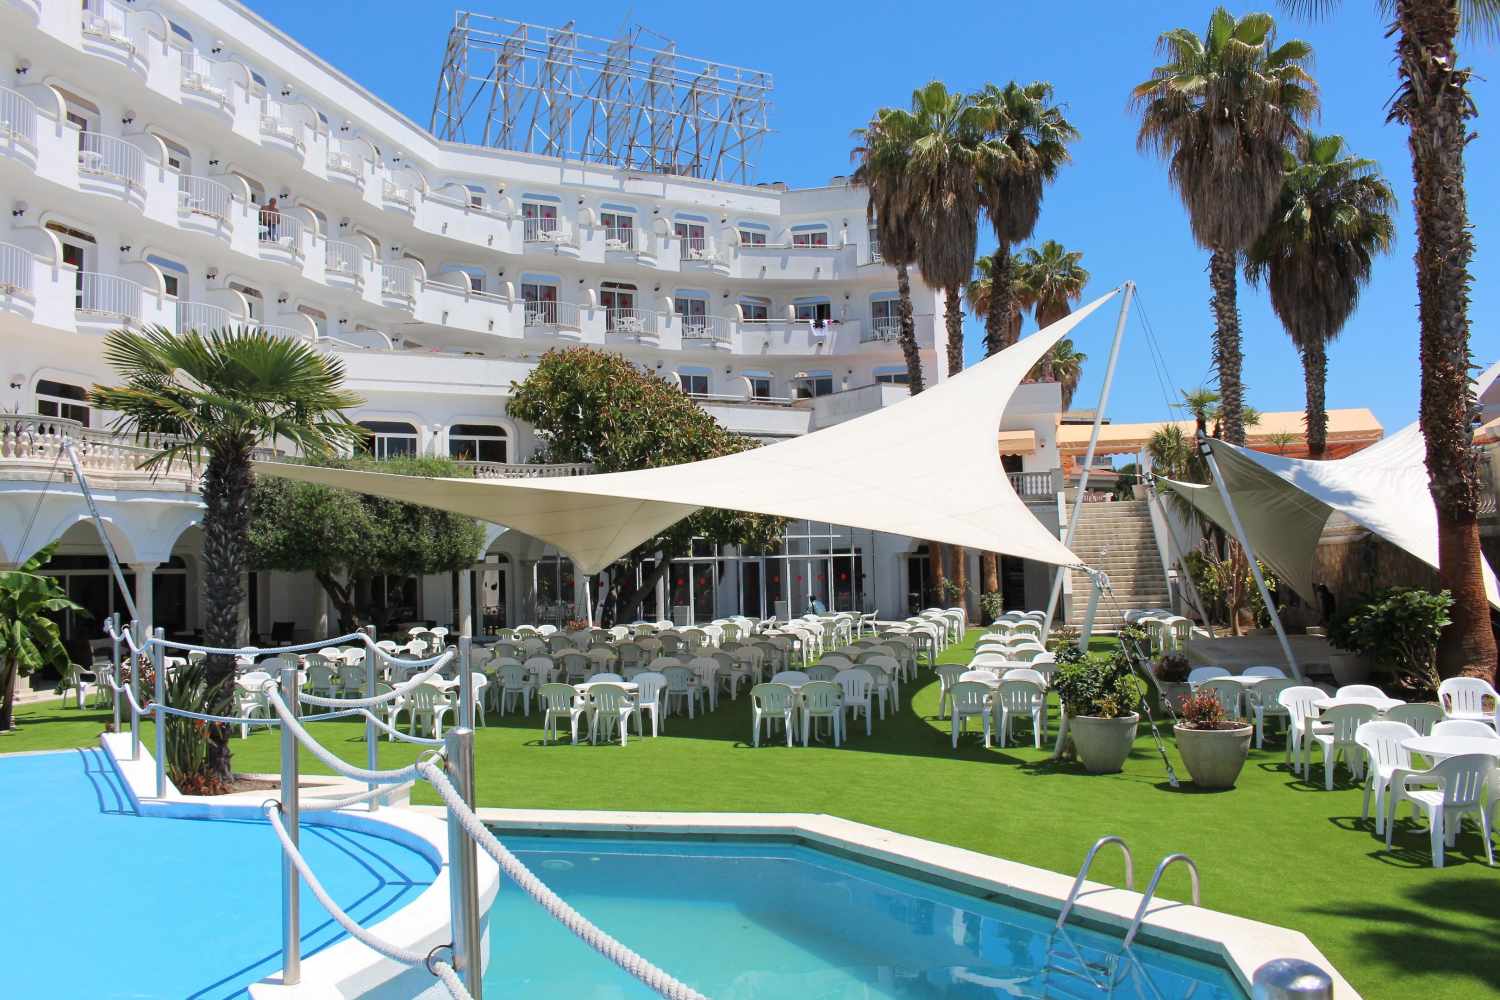 Hotel Best Lloret Splash, Lloret de Mar, Costa Brava, Spanje